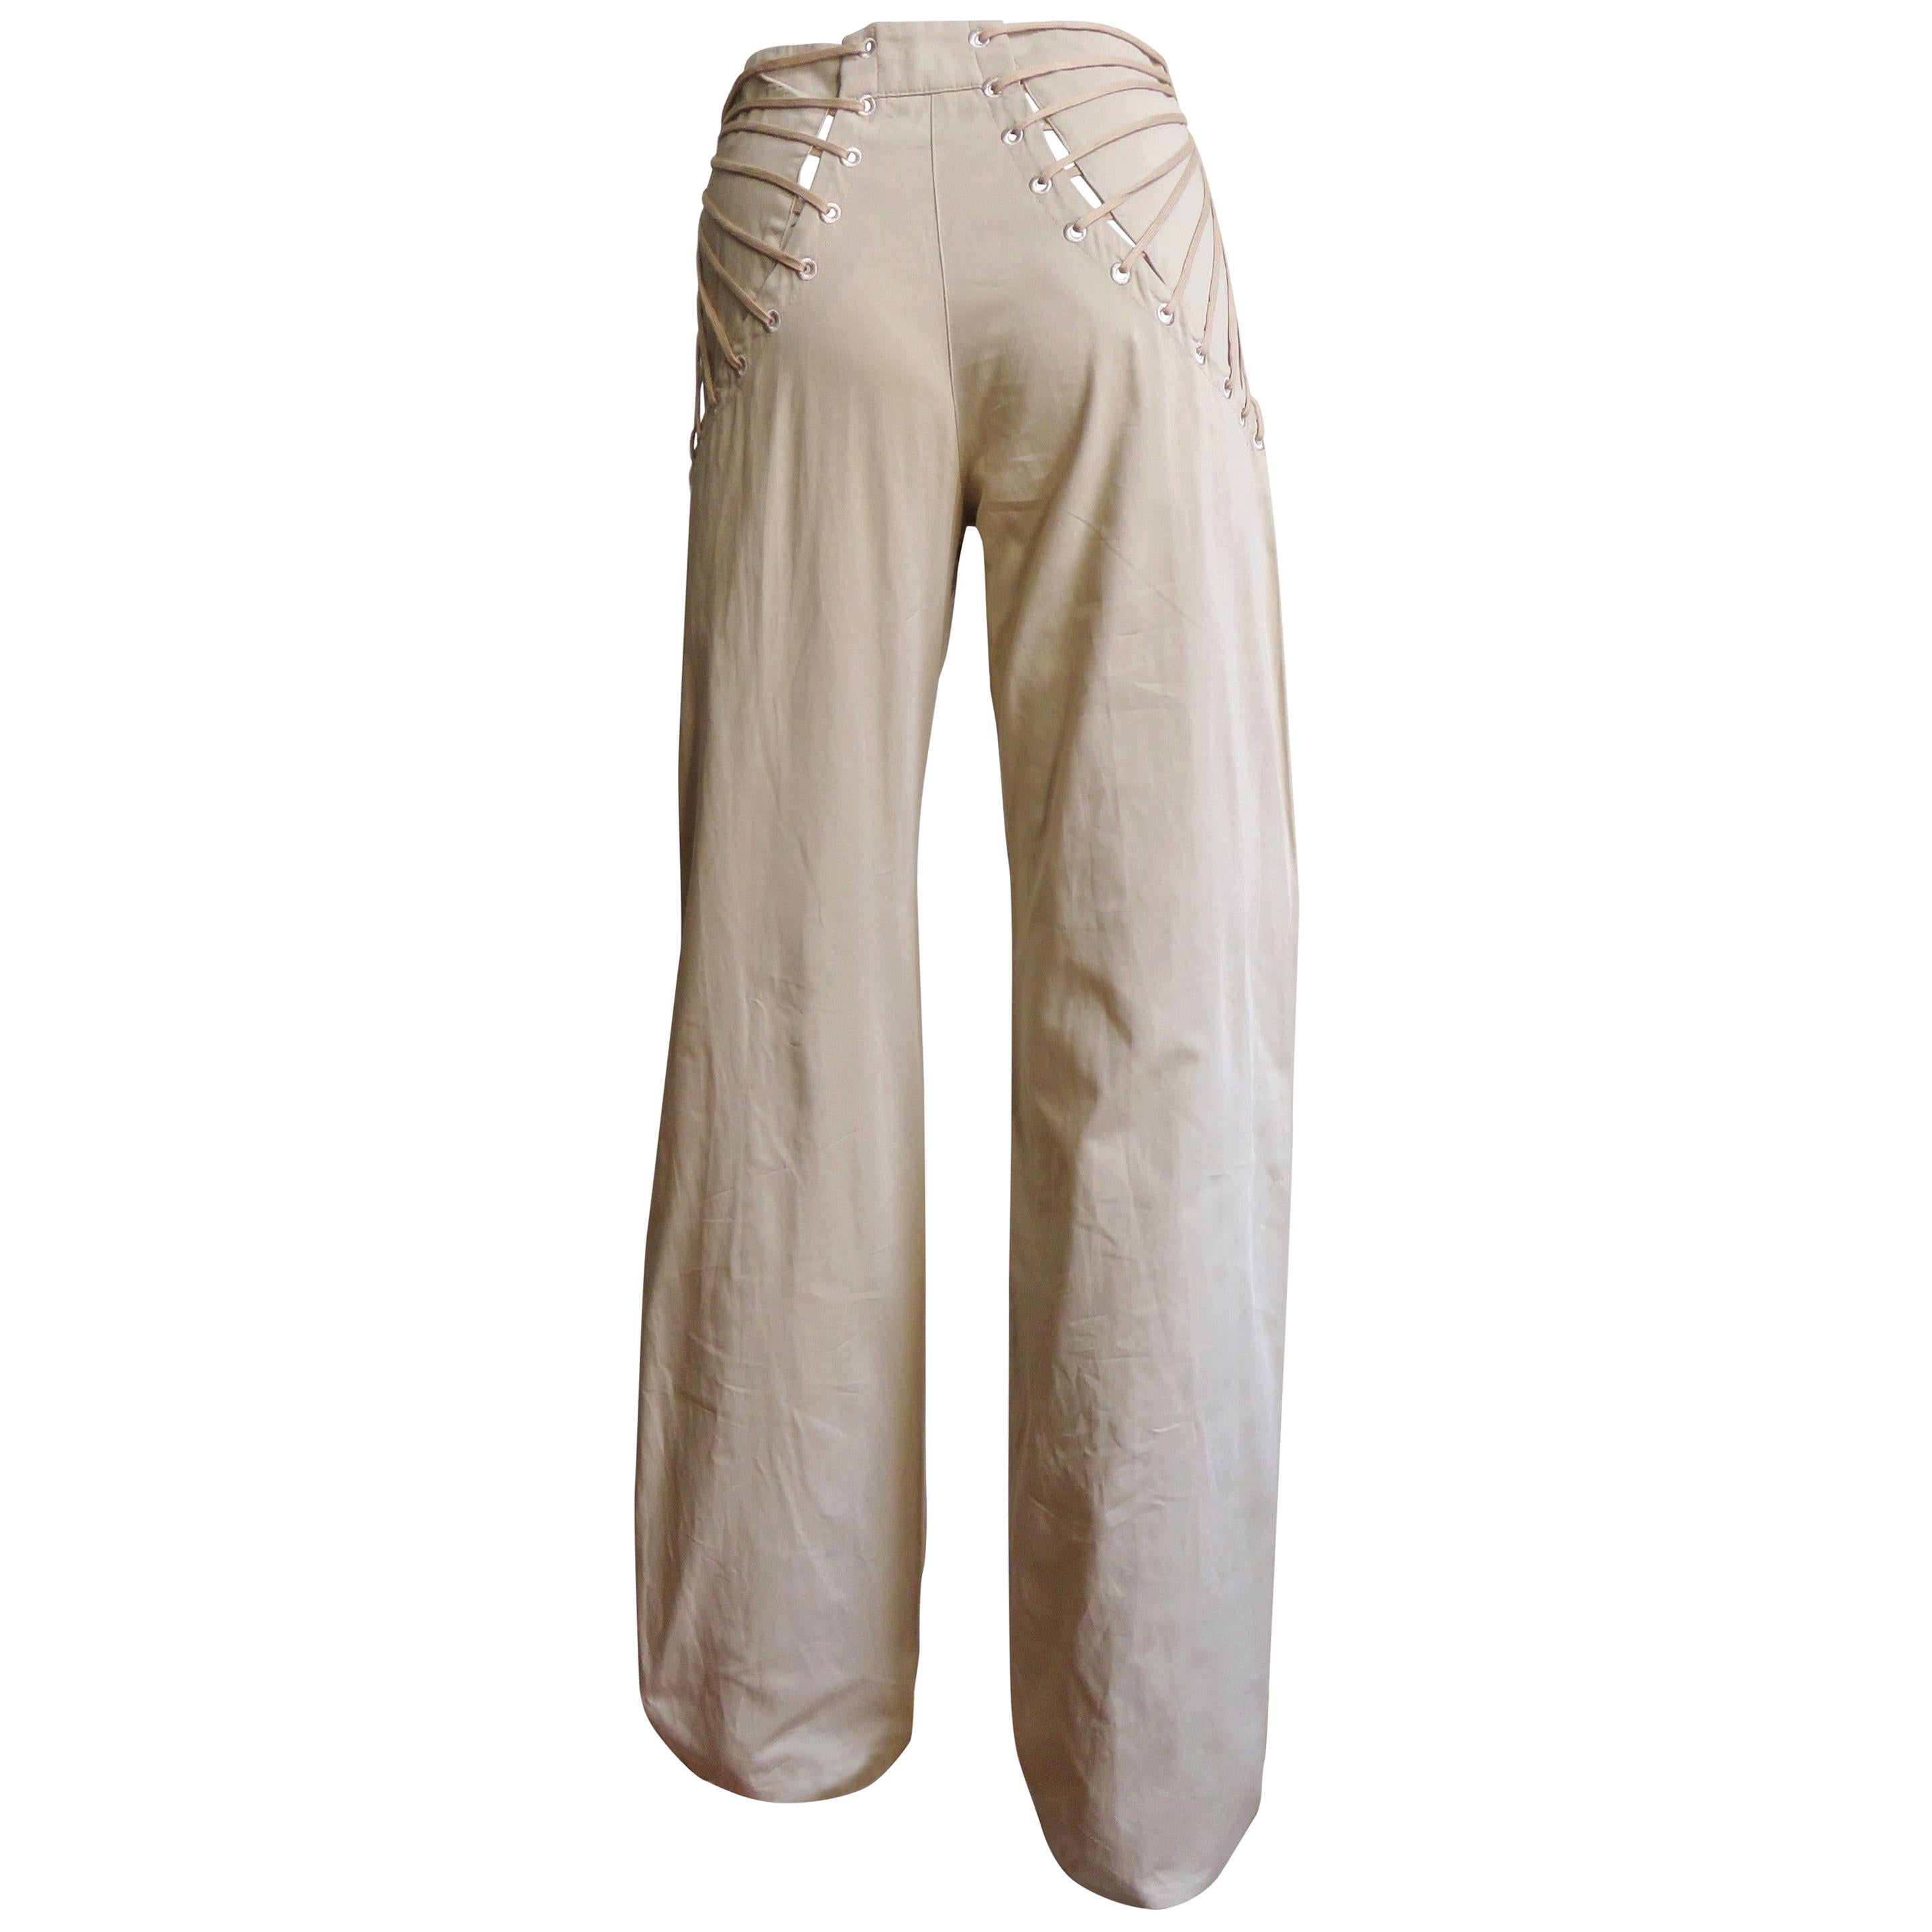 Alexander McQueen New Khaki Pants with Hip Lacing S/S 2002